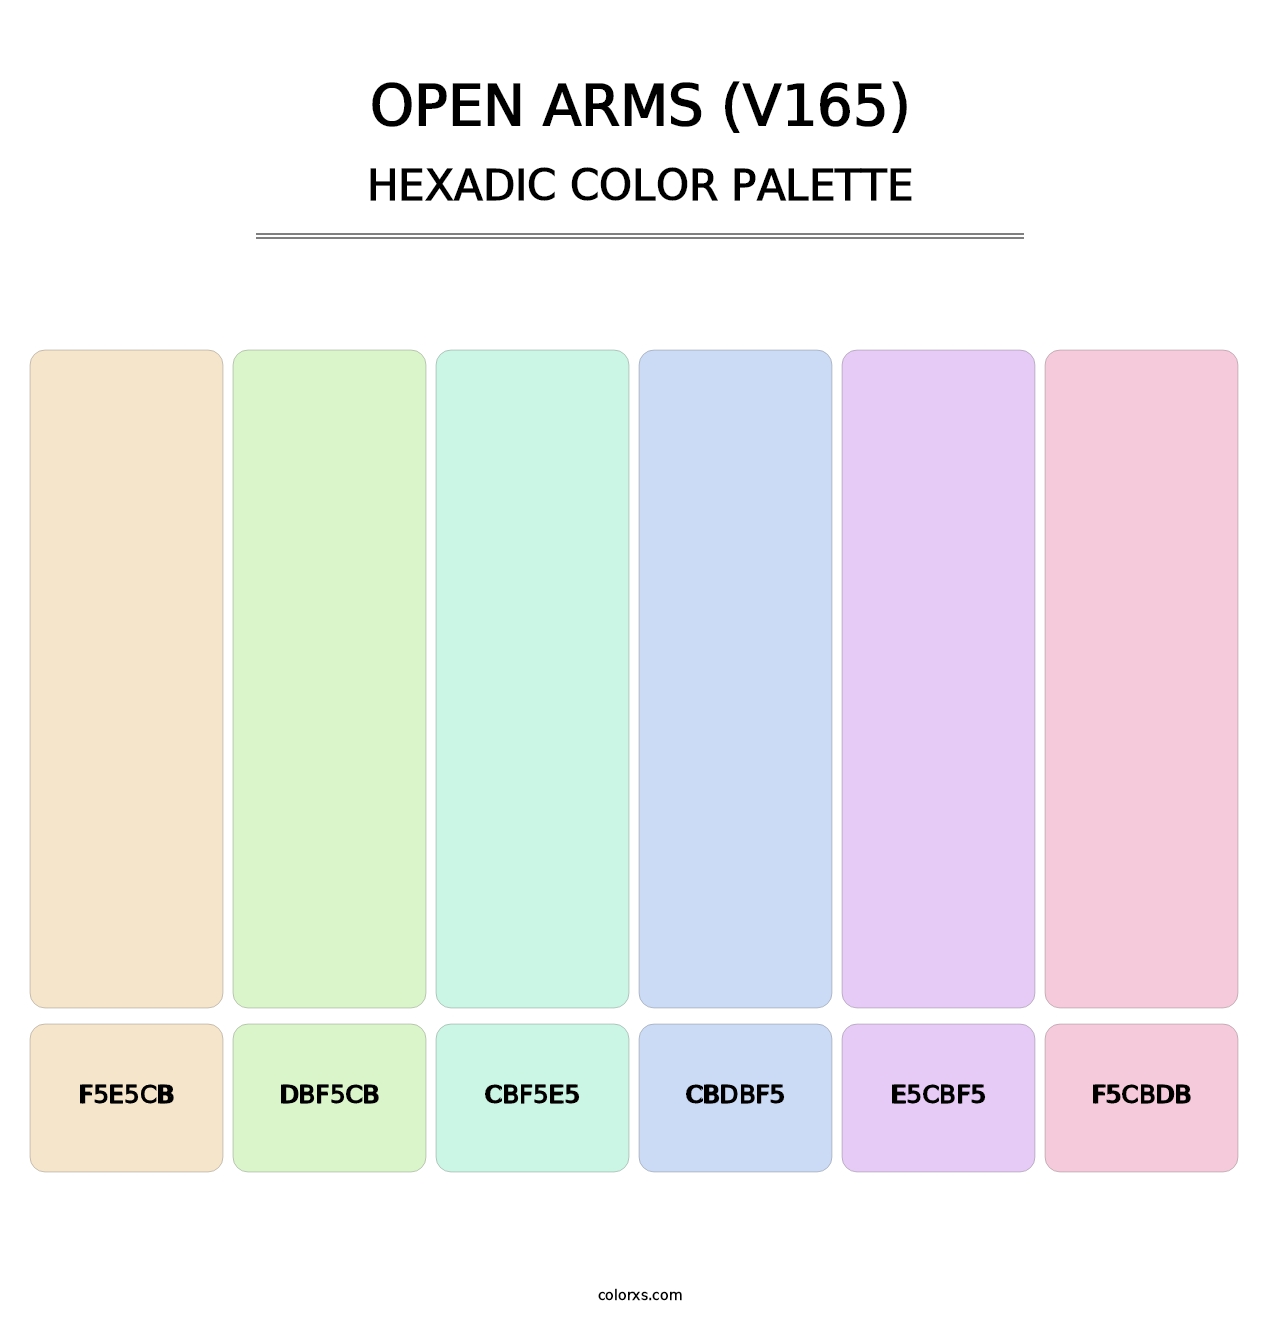 Open Arms (V165) - Hexadic Color Palette